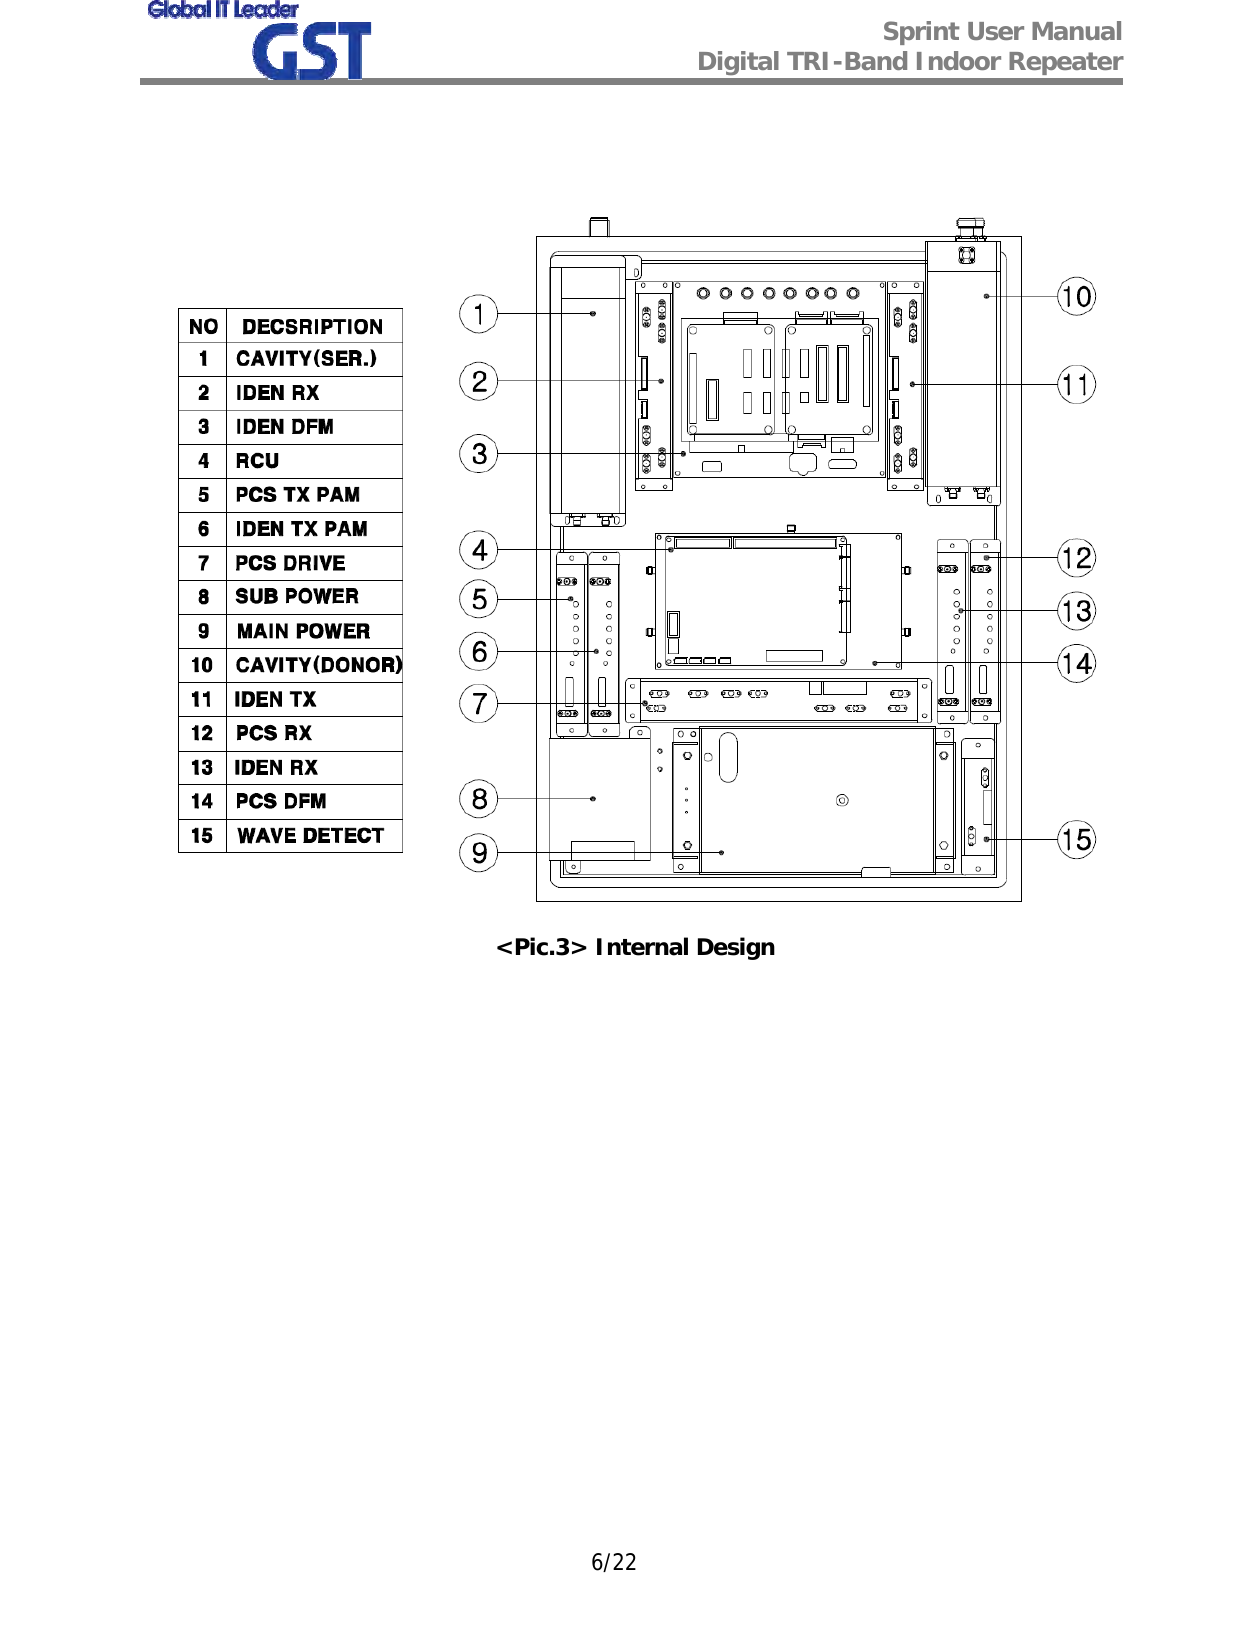  Sprint User Manual Digital TRI-Band Indoor Repeater   6/22    &lt;Pic.3&gt; Internal Design   